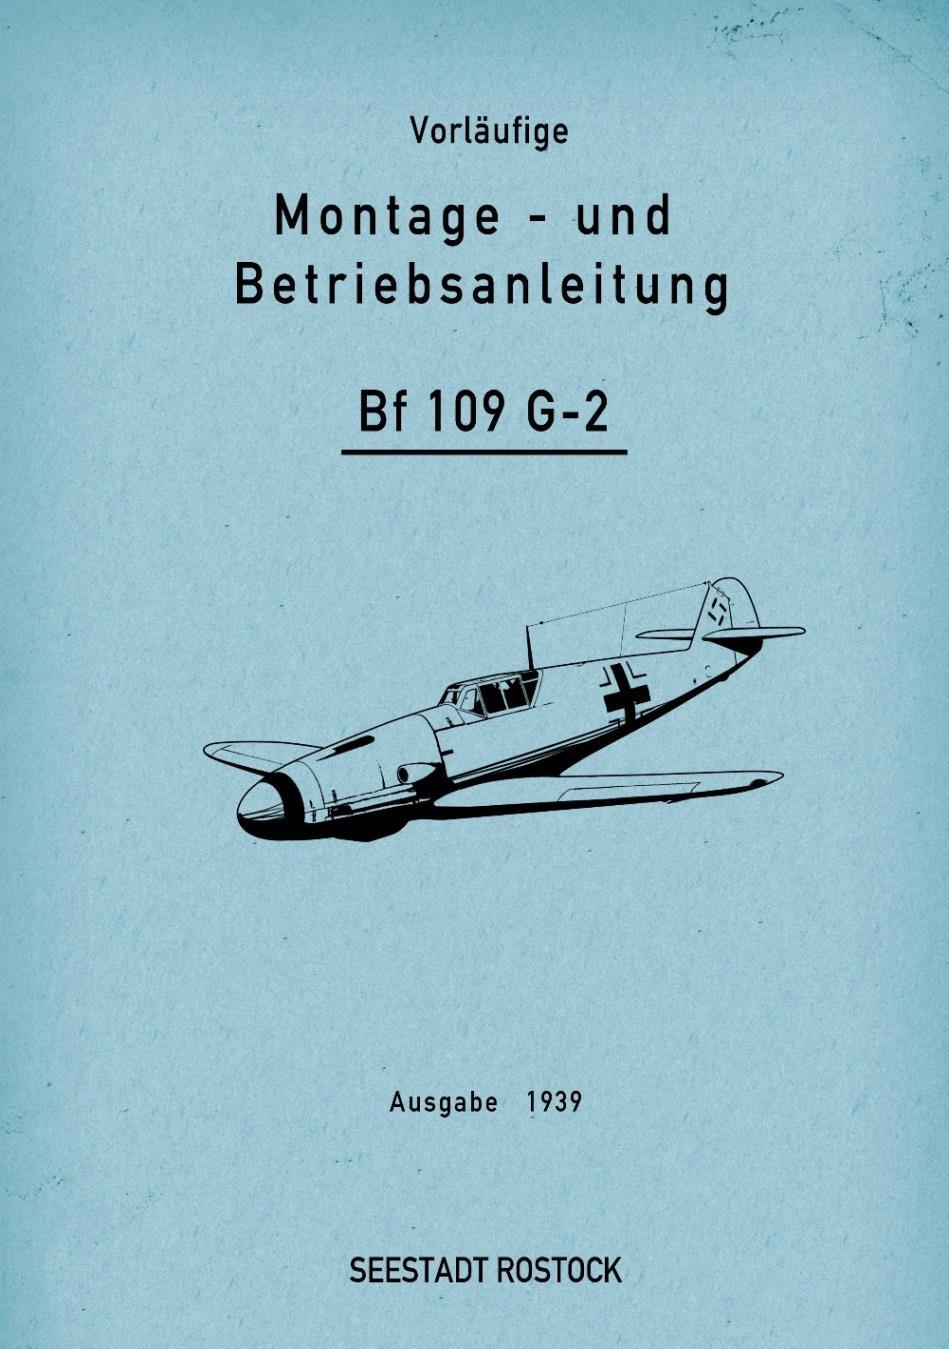 A.4 GERMAN FIGHTERS Messerschmitt Bf-109 G-2 The G-series Bf-109 was a further development of the F-series design.